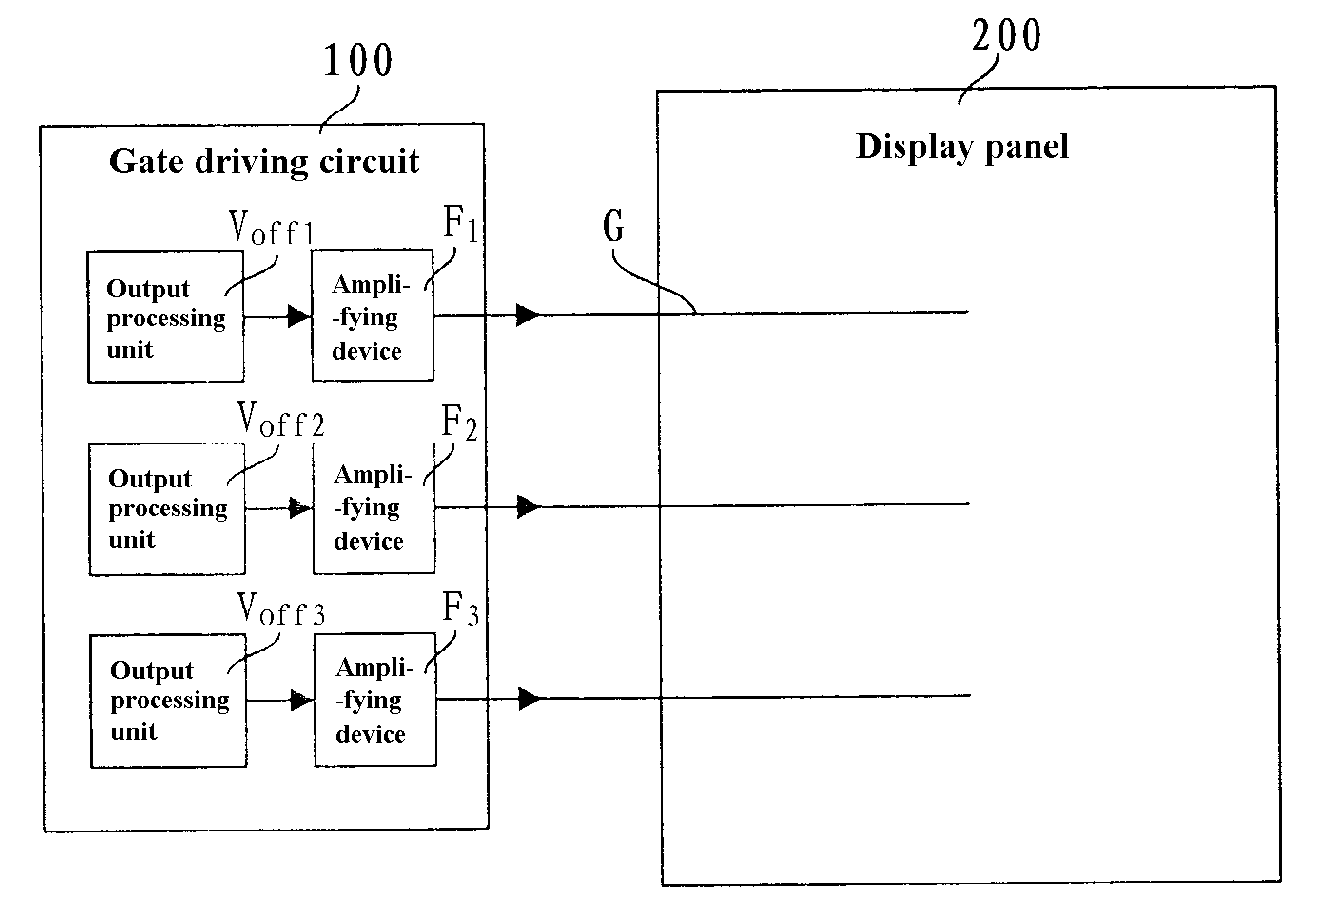 Gate driving circuit and liquid crystal display